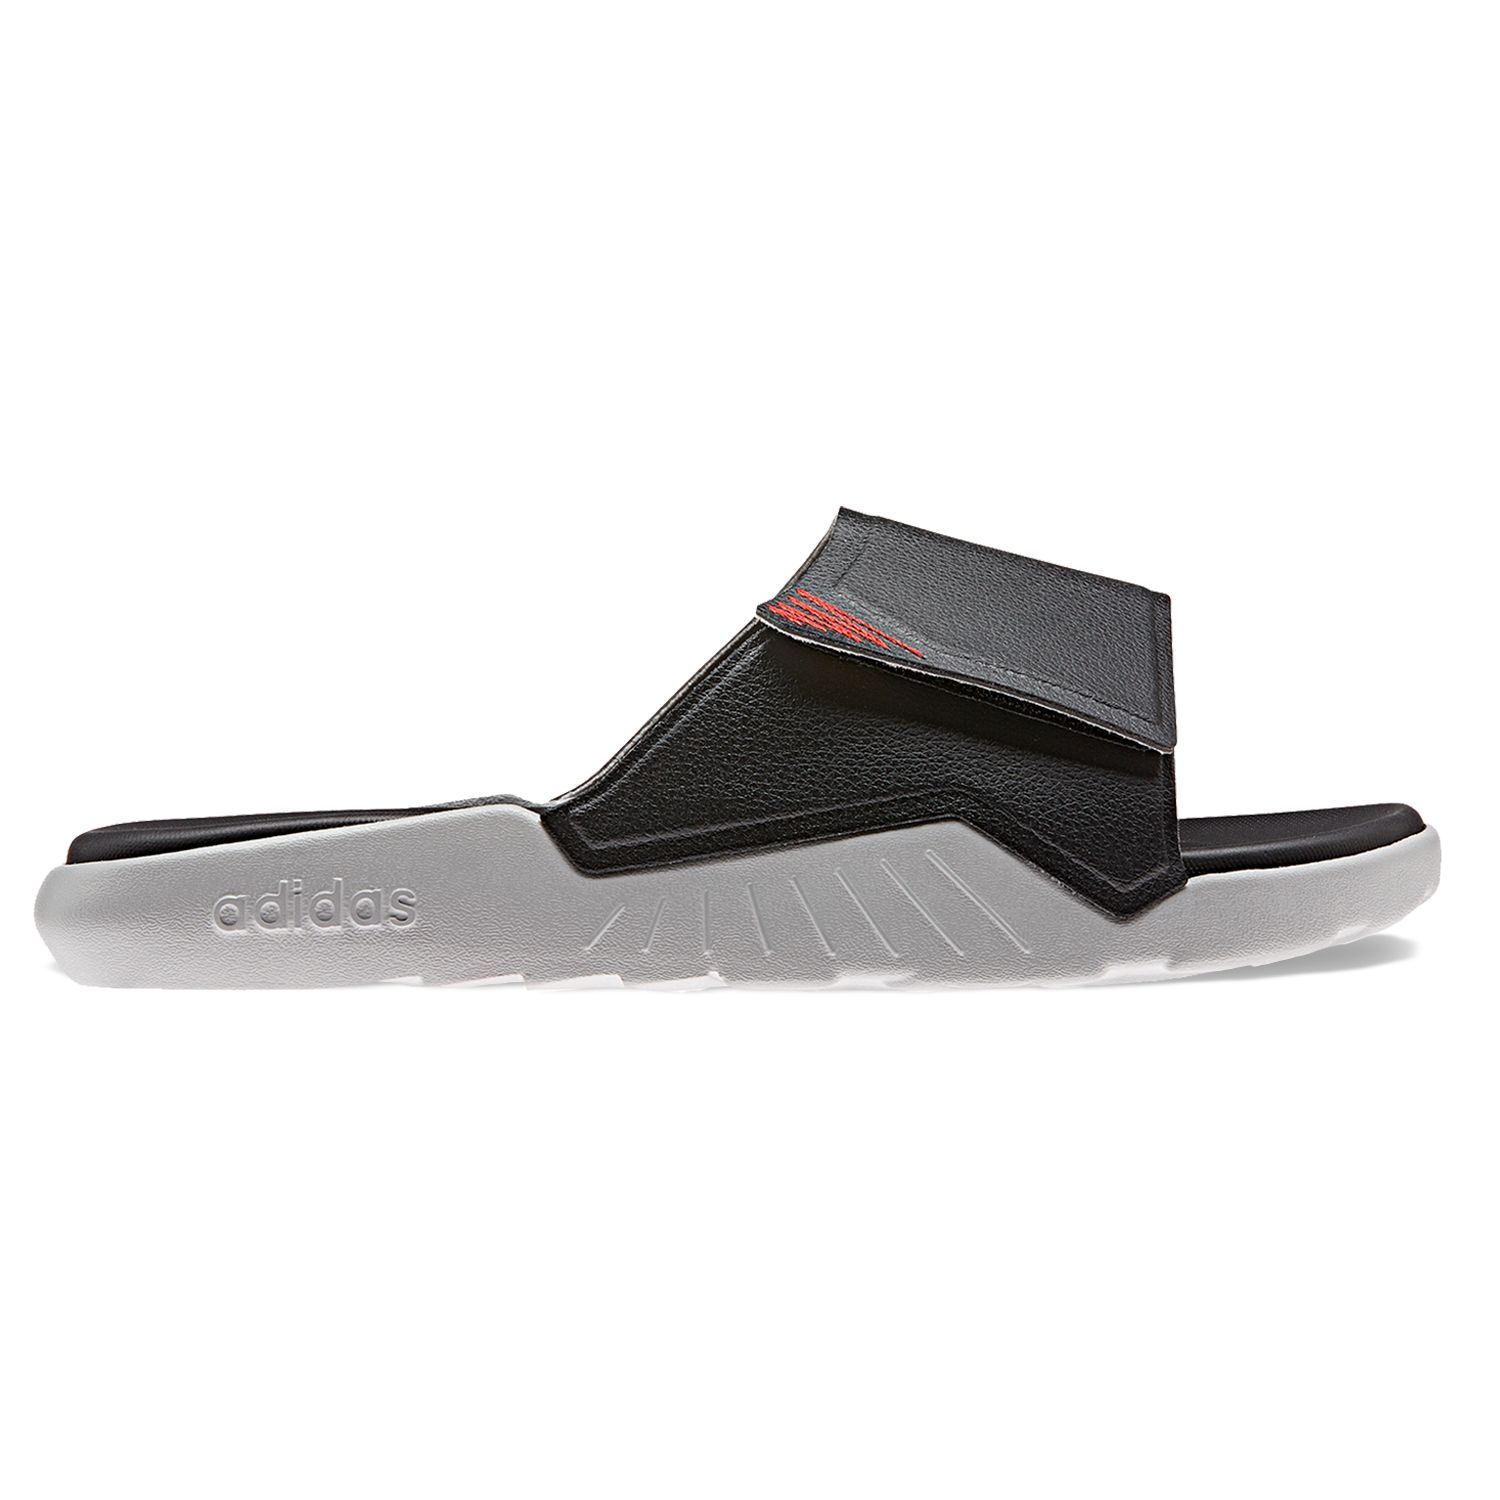 adidas Questar Men's Slide Sandals